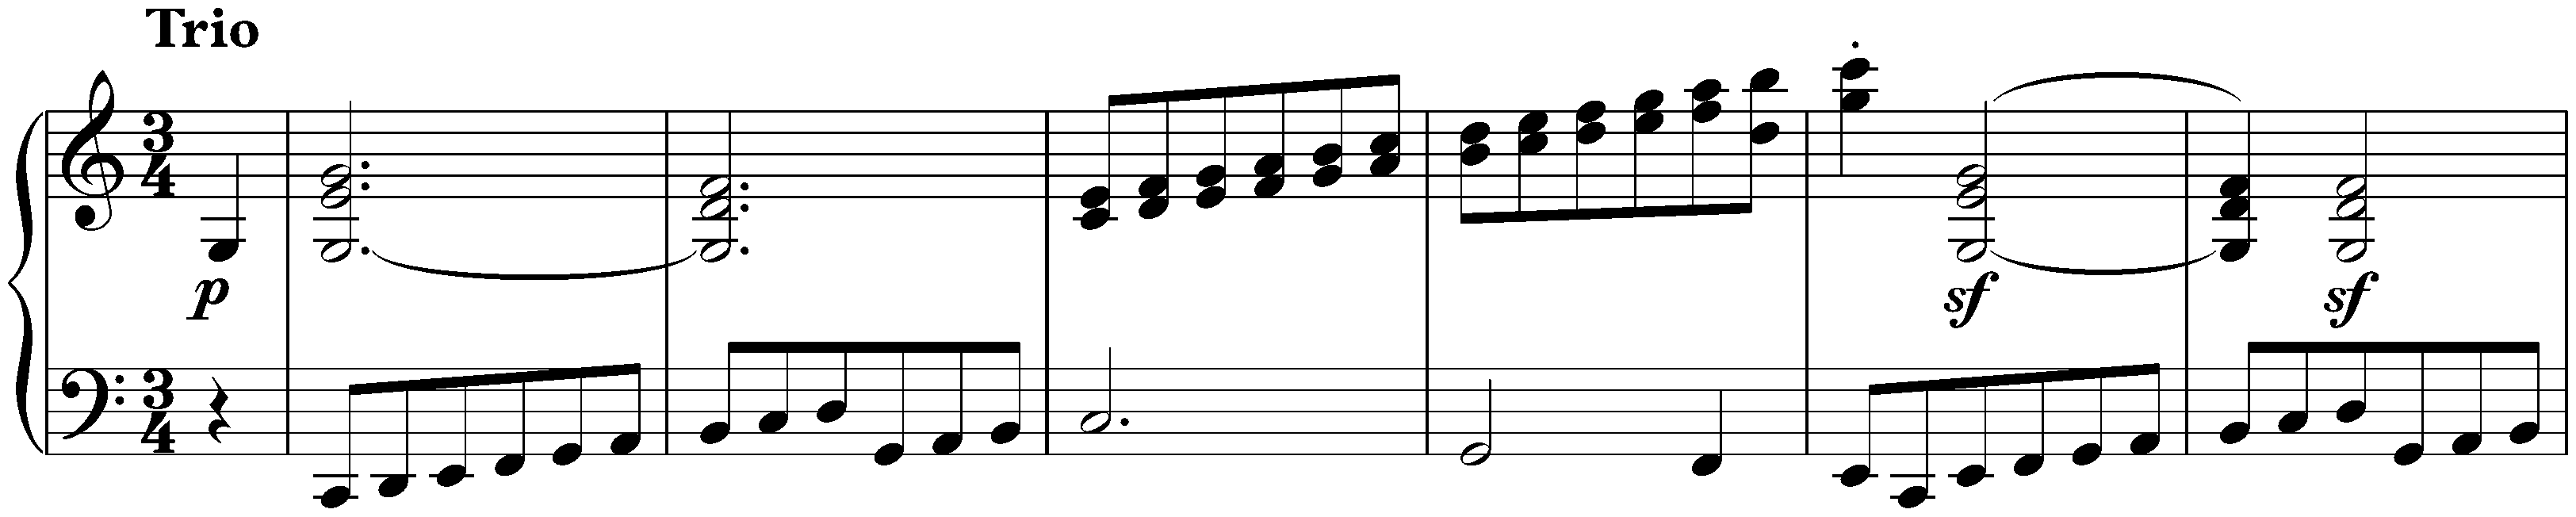 Seven Bagatelles, op. 33; 2. C major